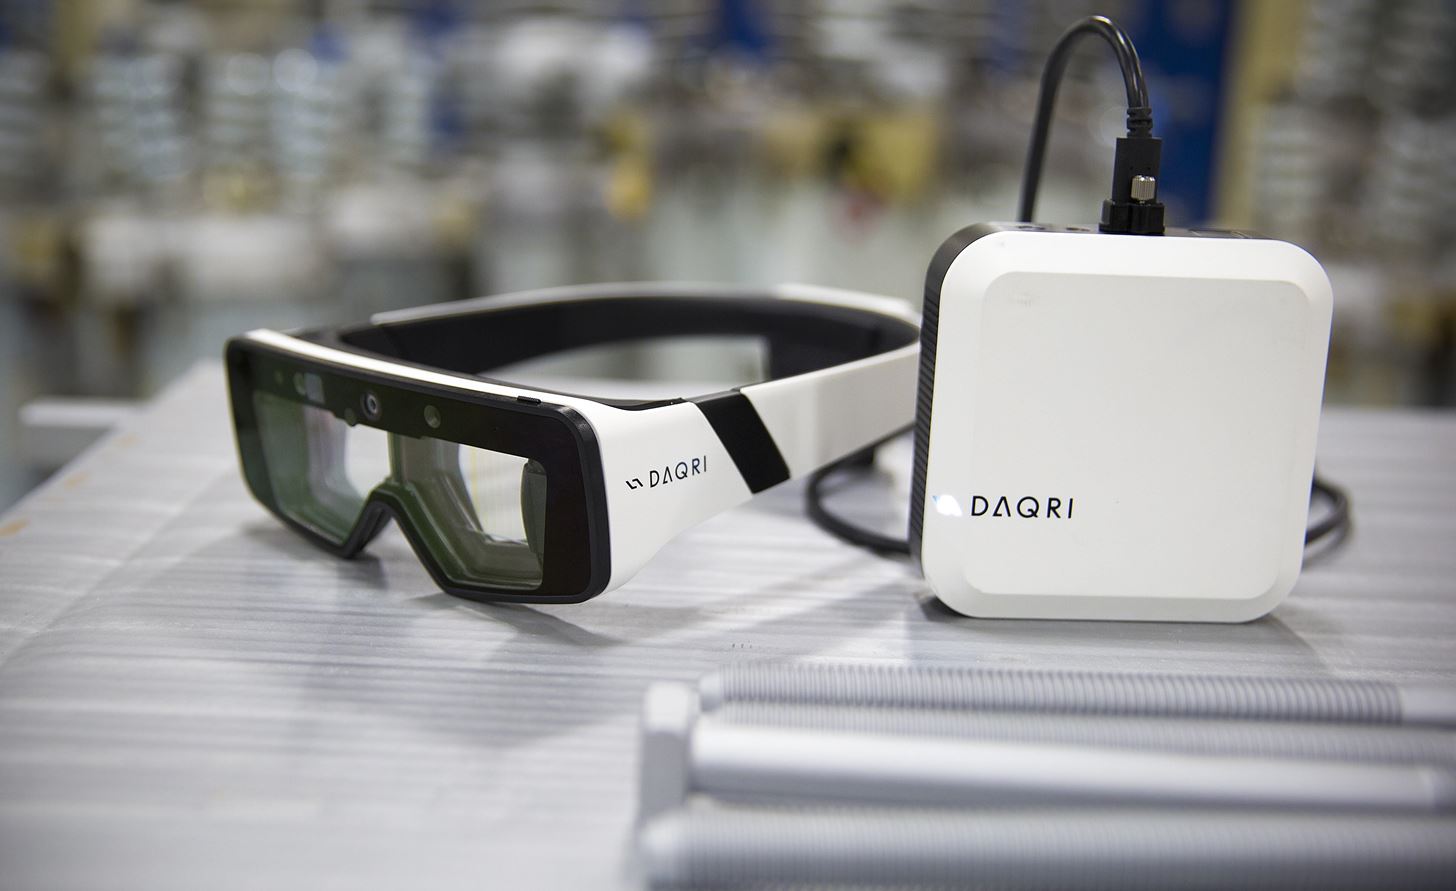 DAQRI Begins Shipping Its Ruggedized, Yet Portable AR Smartglasses Worldwide